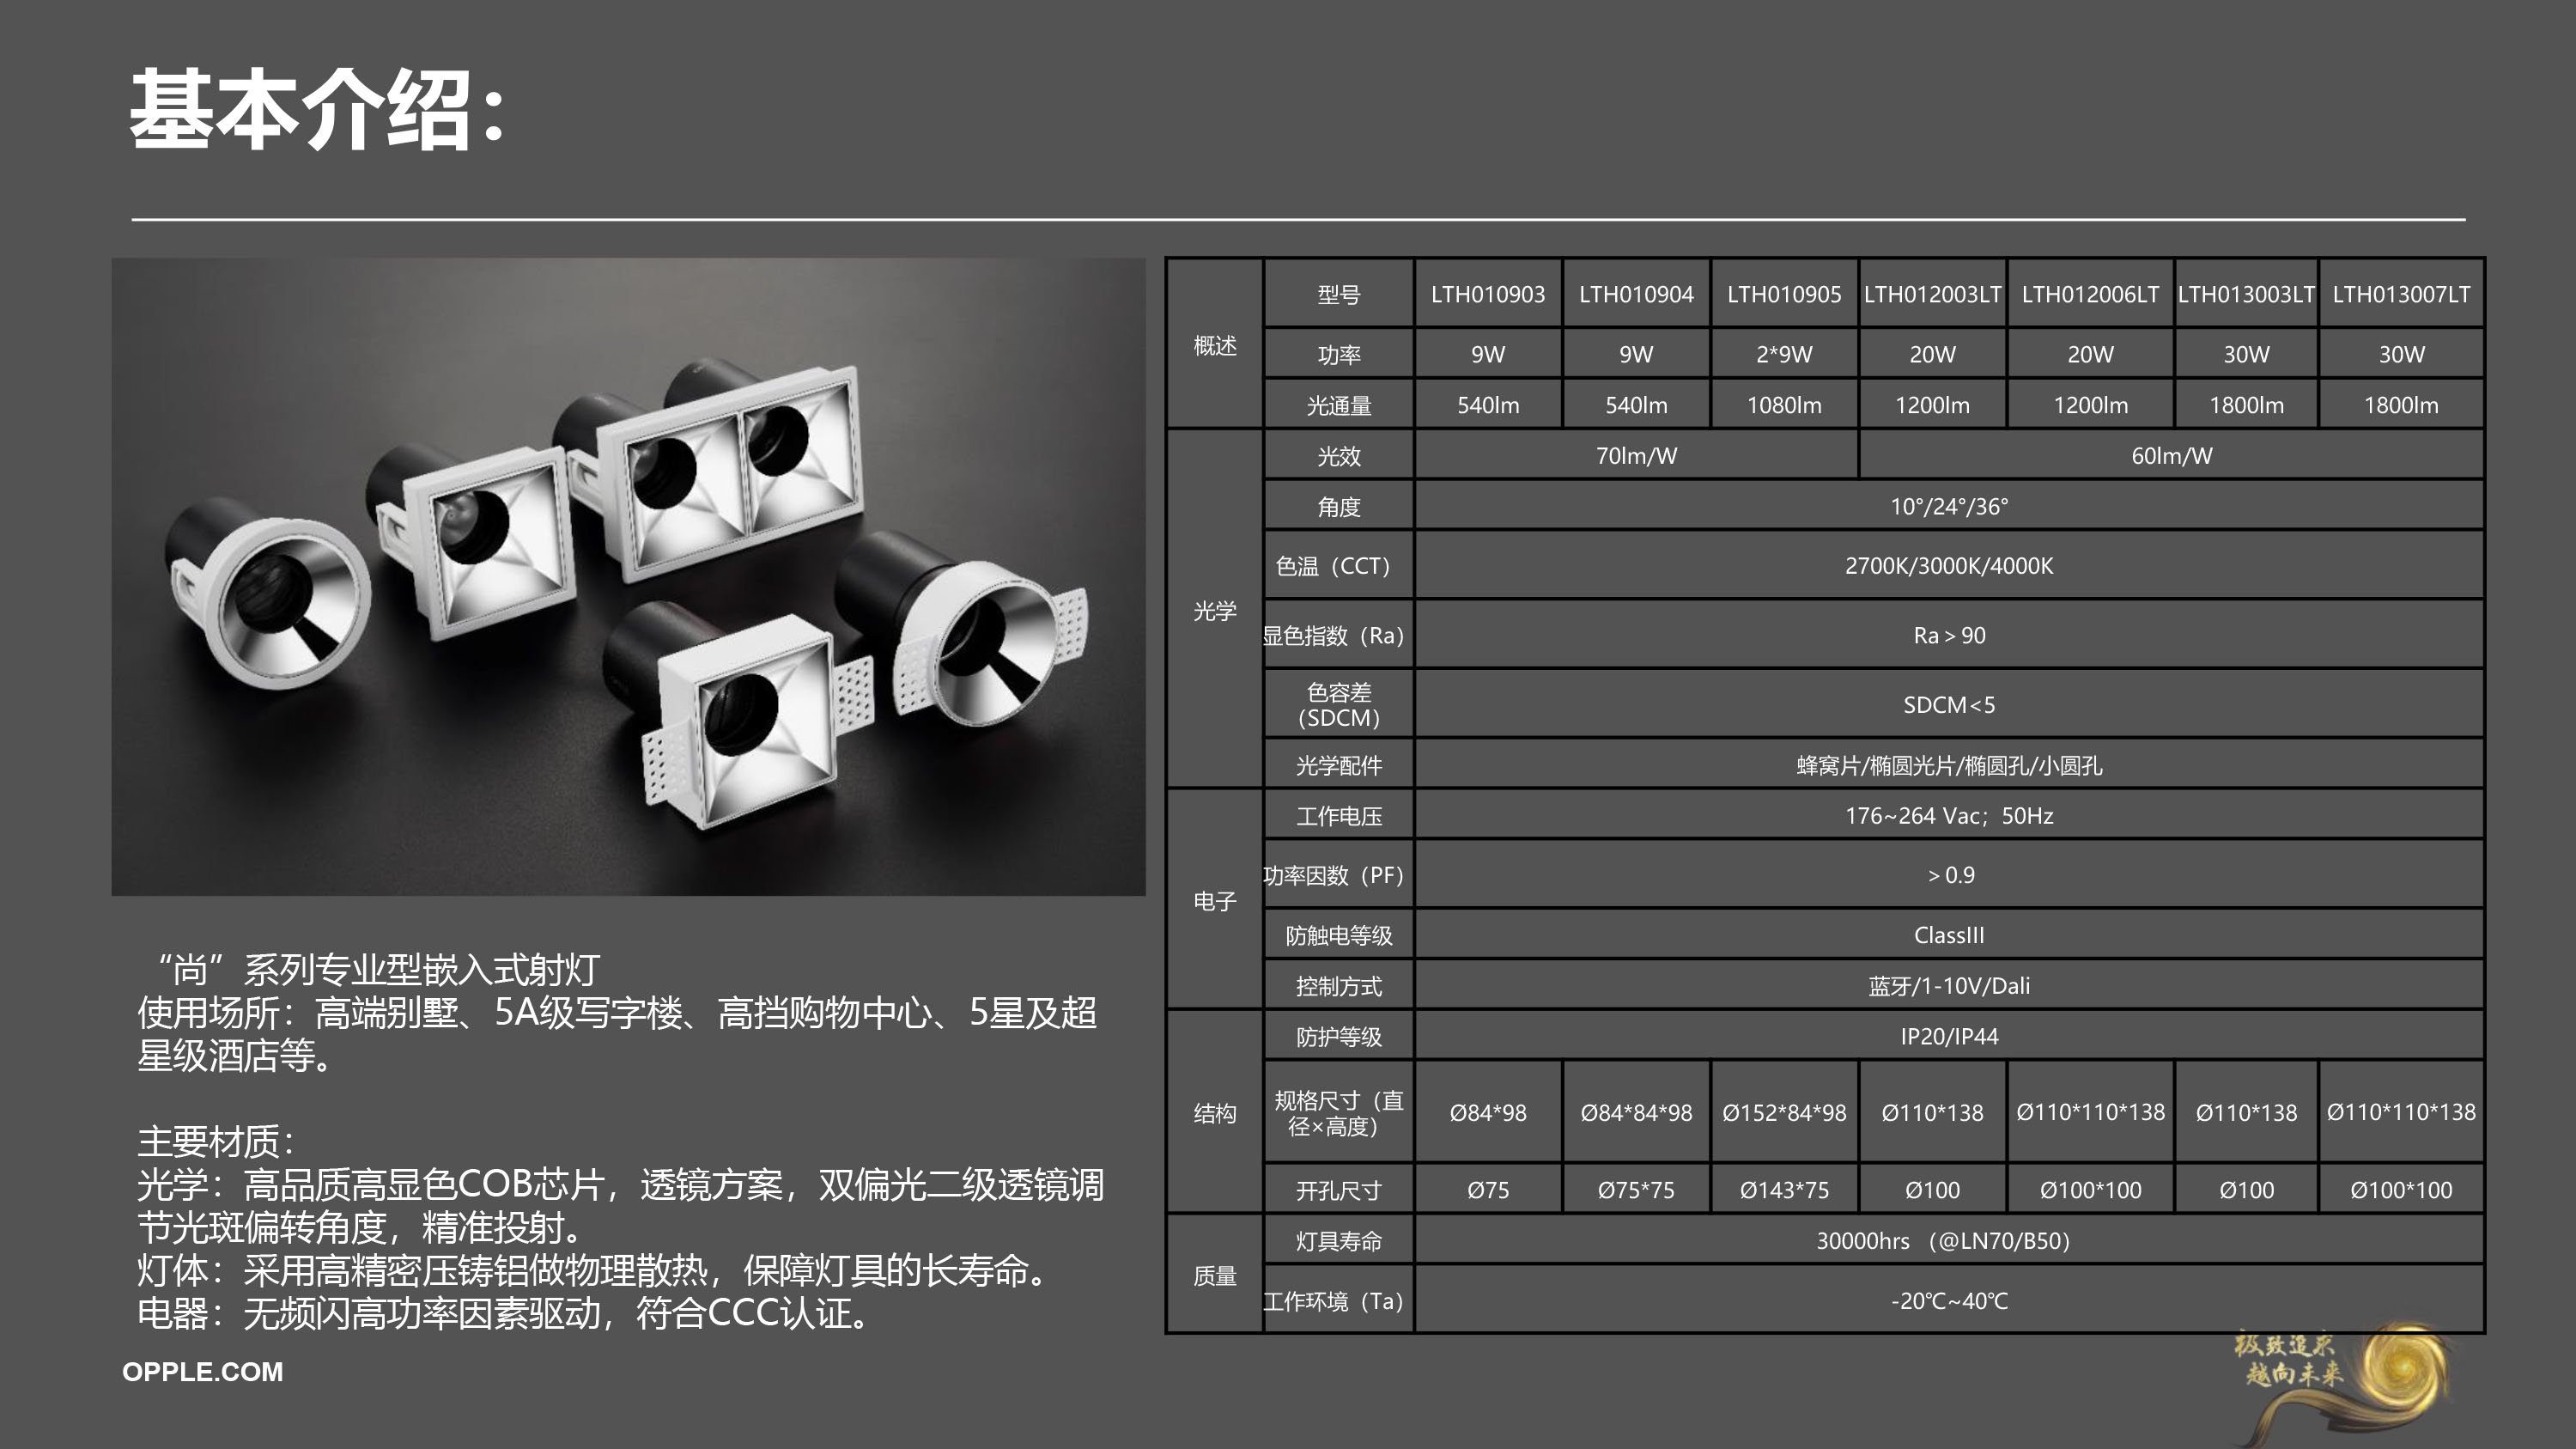 LED专业型嵌入式射灯-尚系列-产品介绍(1)-3.jpg